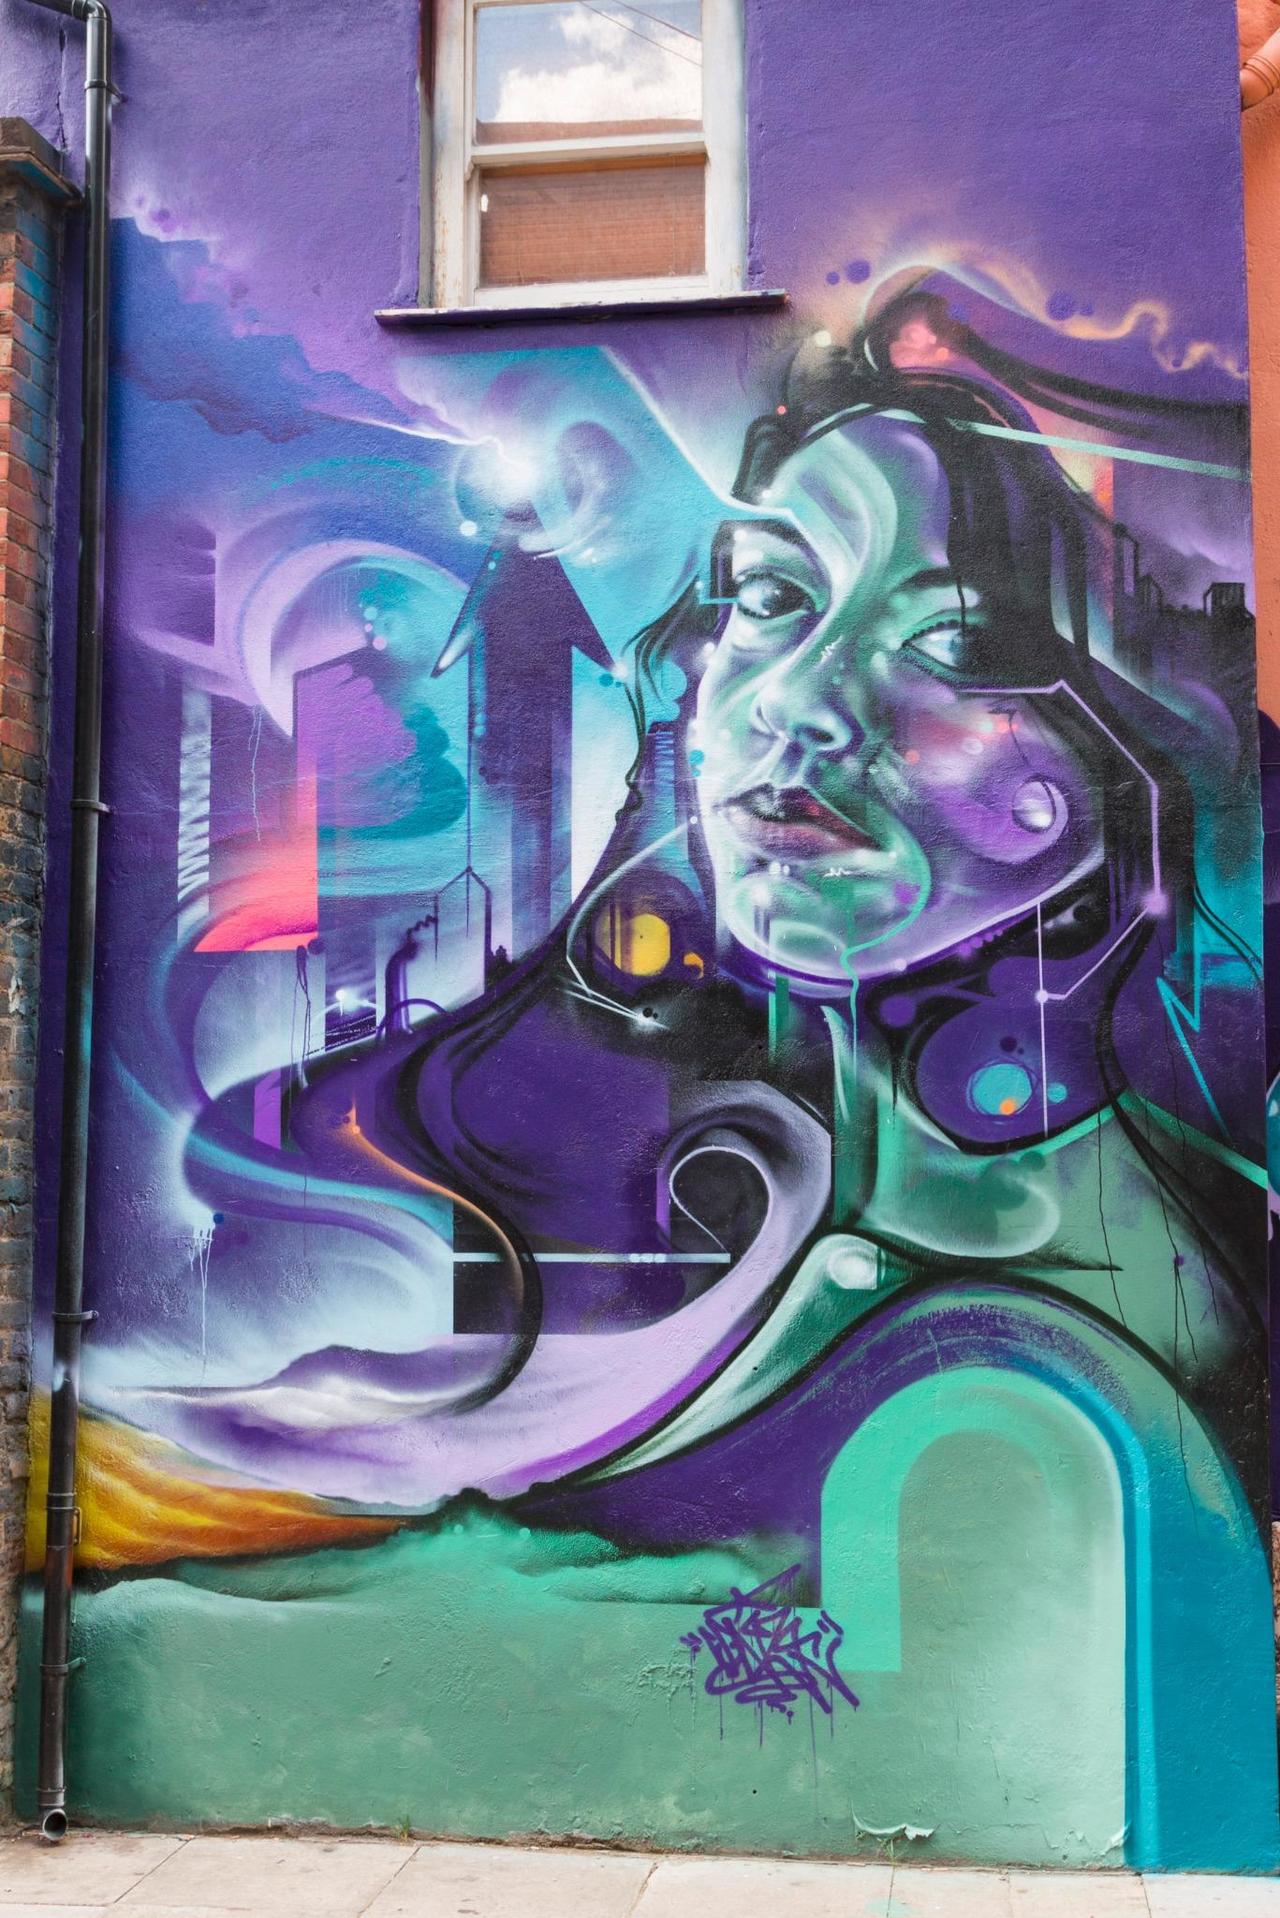 #graffitiuk #graffiti #shoreditch #streetartlondon #streetart #spraycanart #spraypaint #art #artistic #artwork http://t.co/Dh2nrRAC53